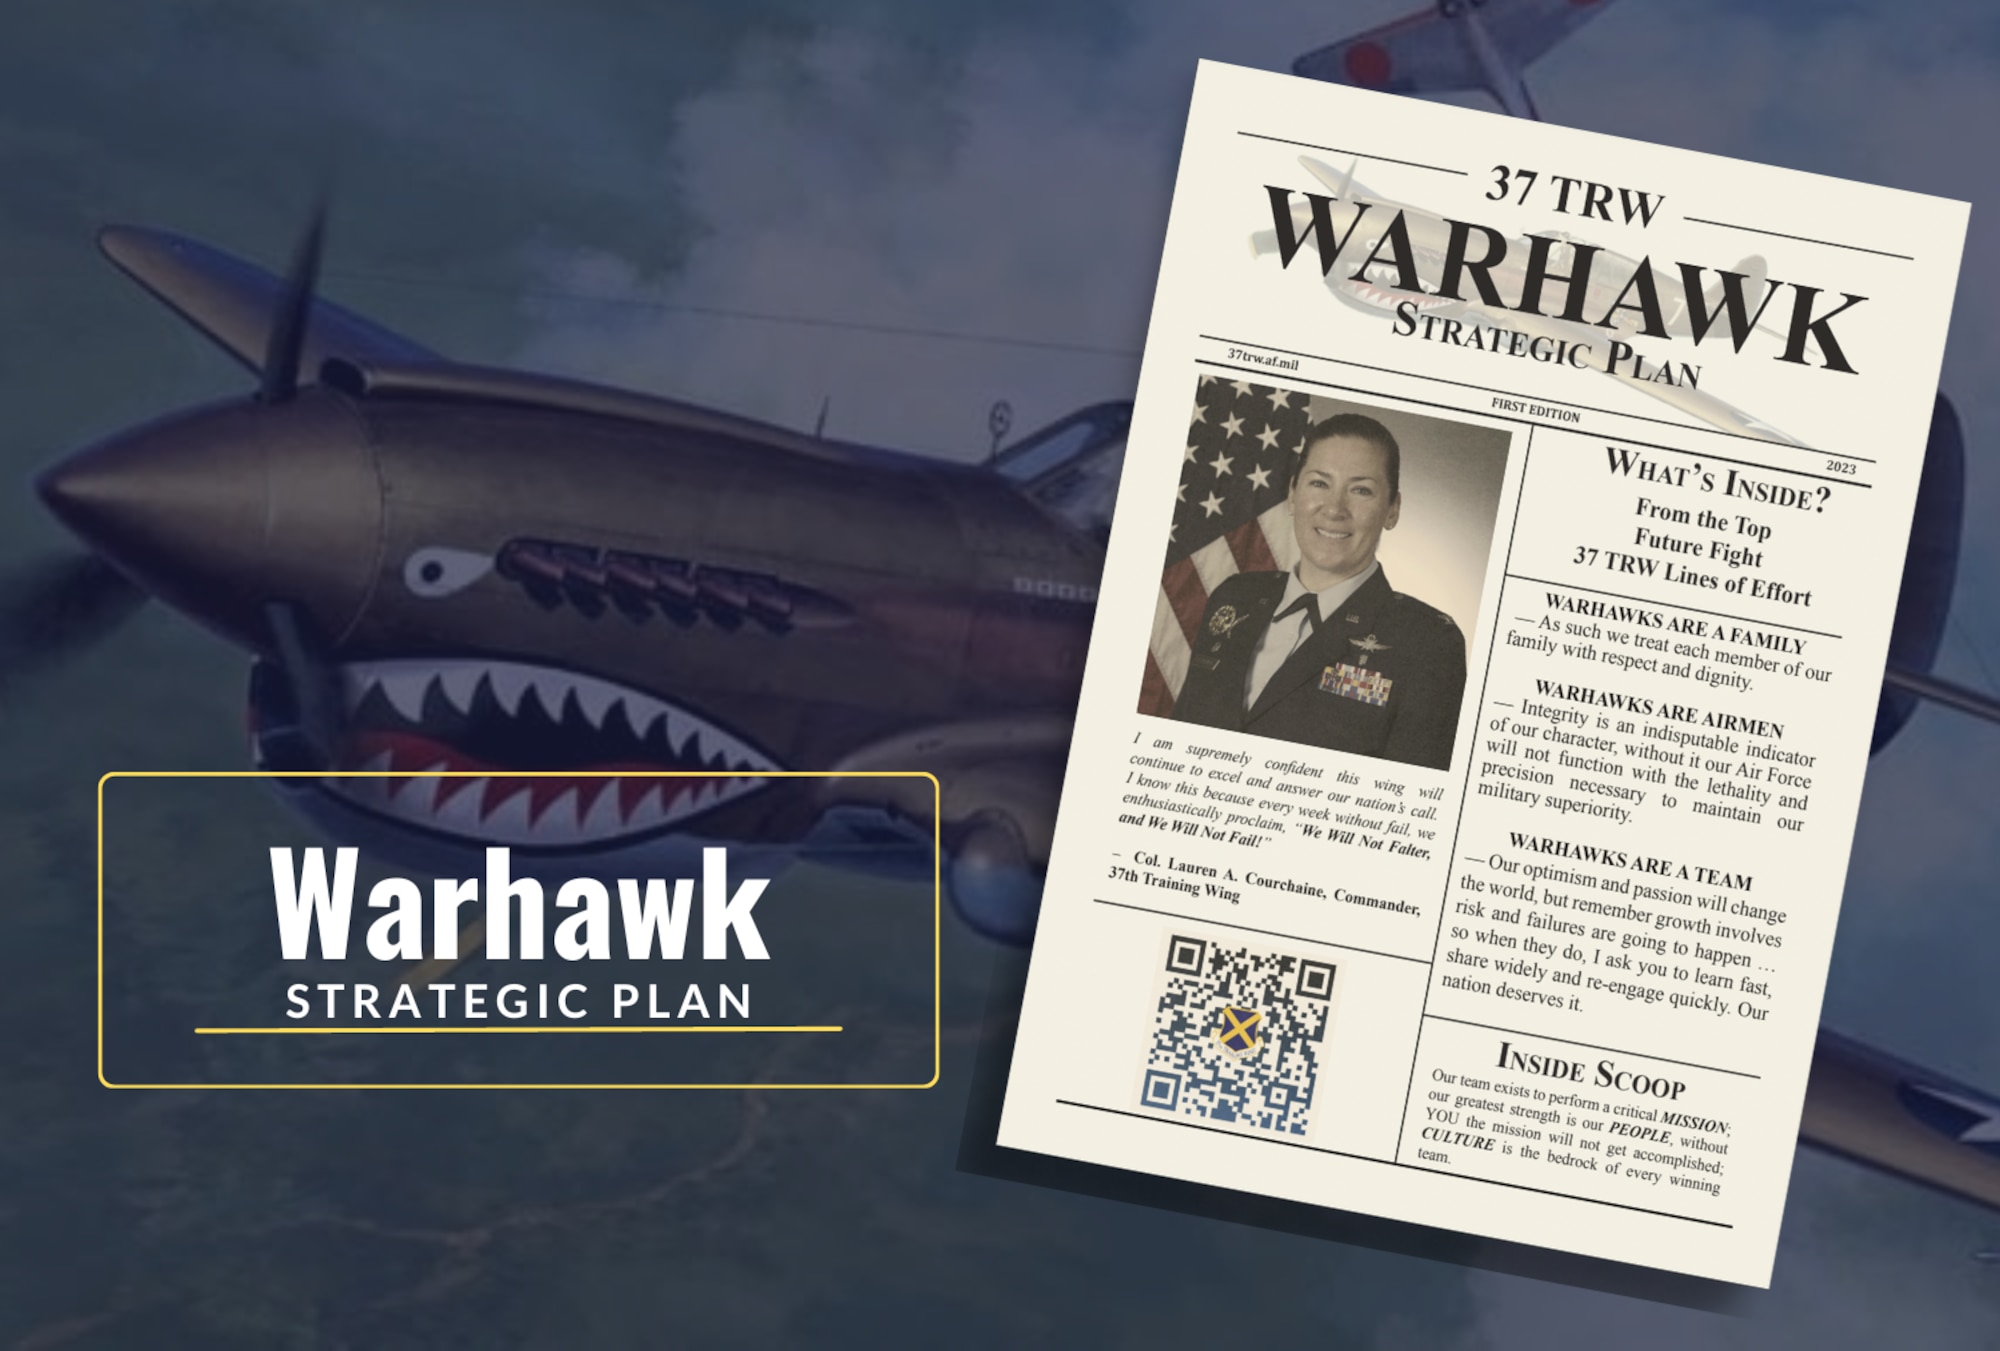 Warhawk Strategic Plan Photo